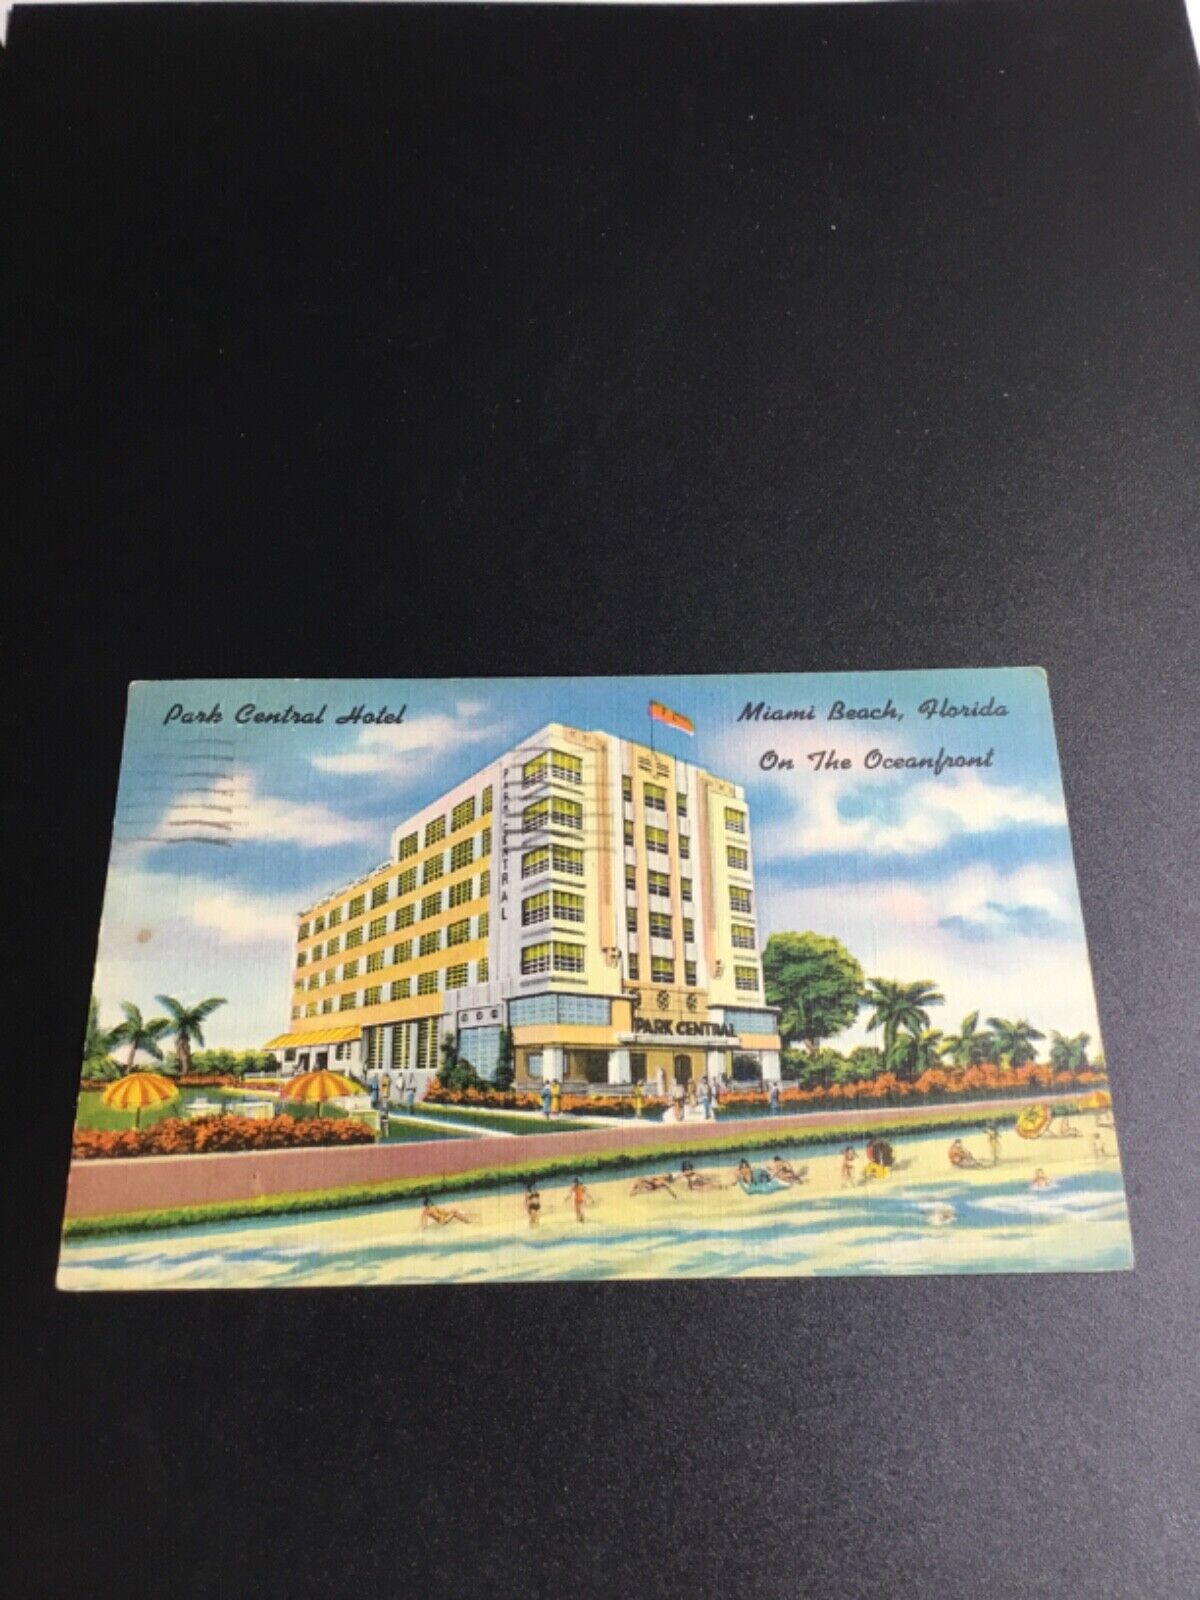 1951 Miami Beach, FL Postcard - Park Central Hotel 1556